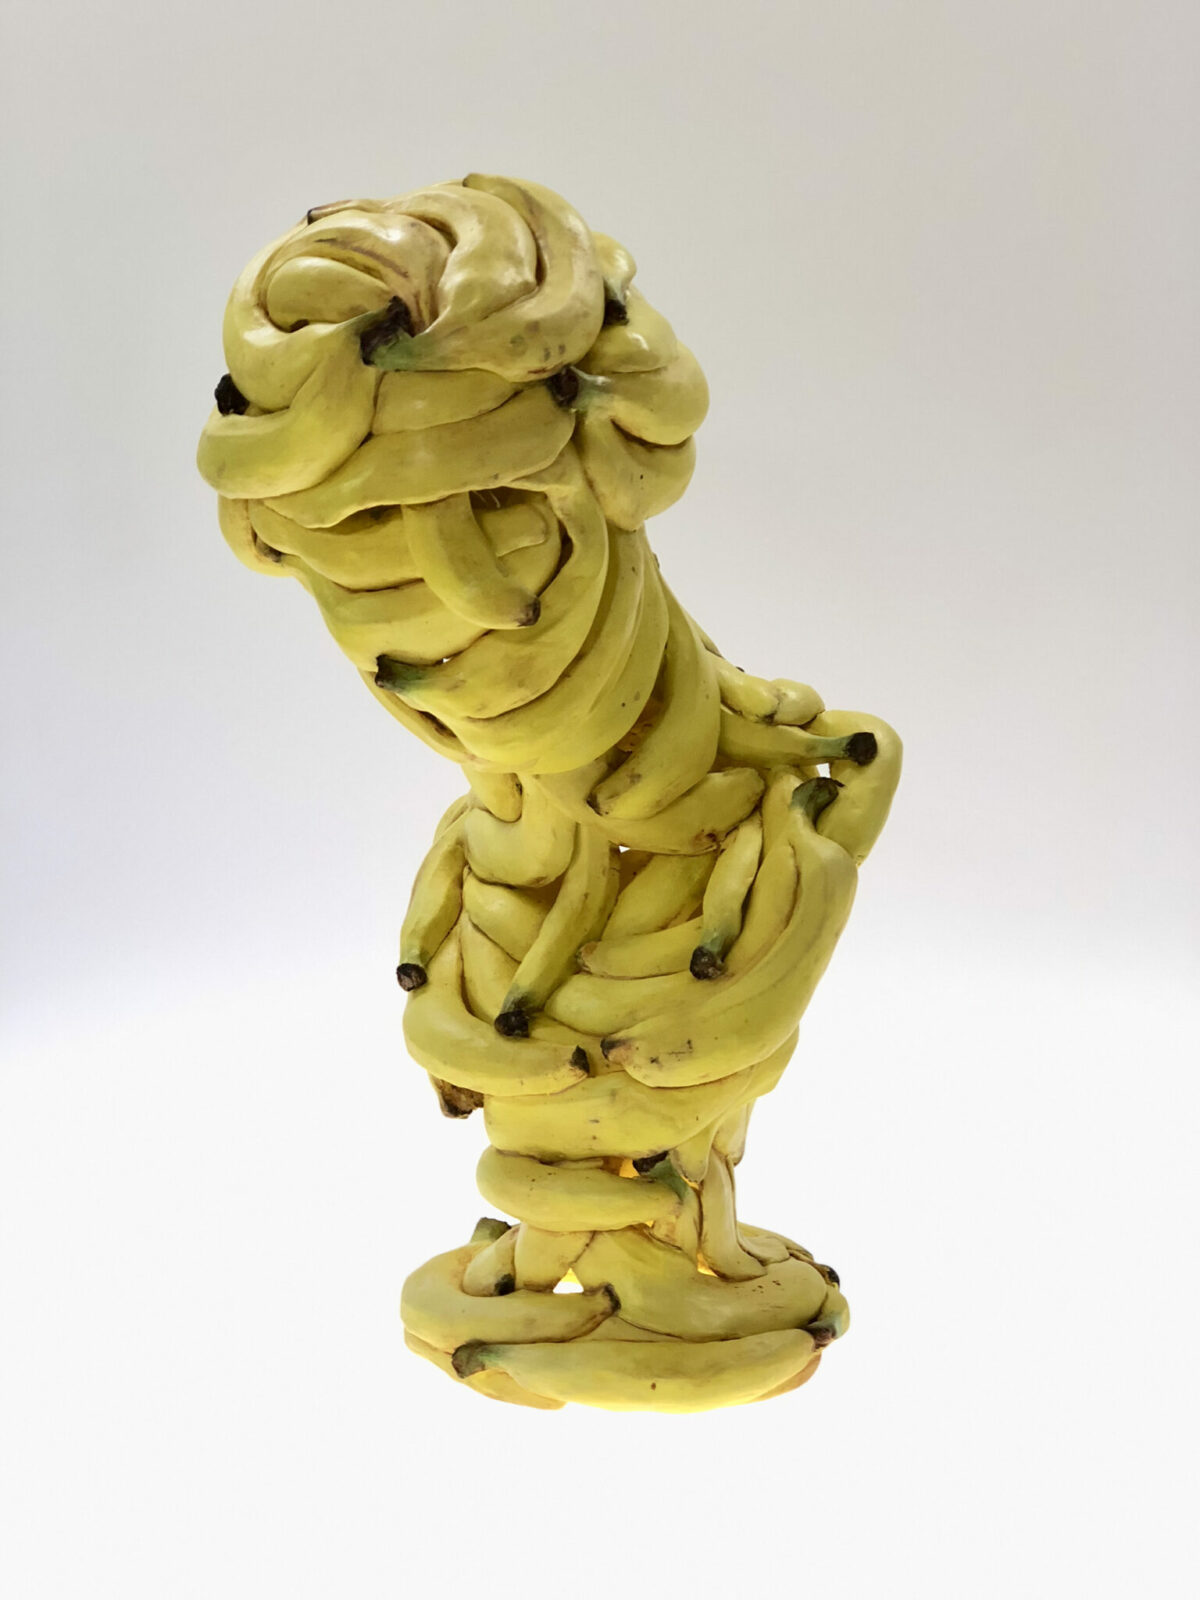 Surreal bananas: amusing ceramic sculptures by Koji Kasatani 